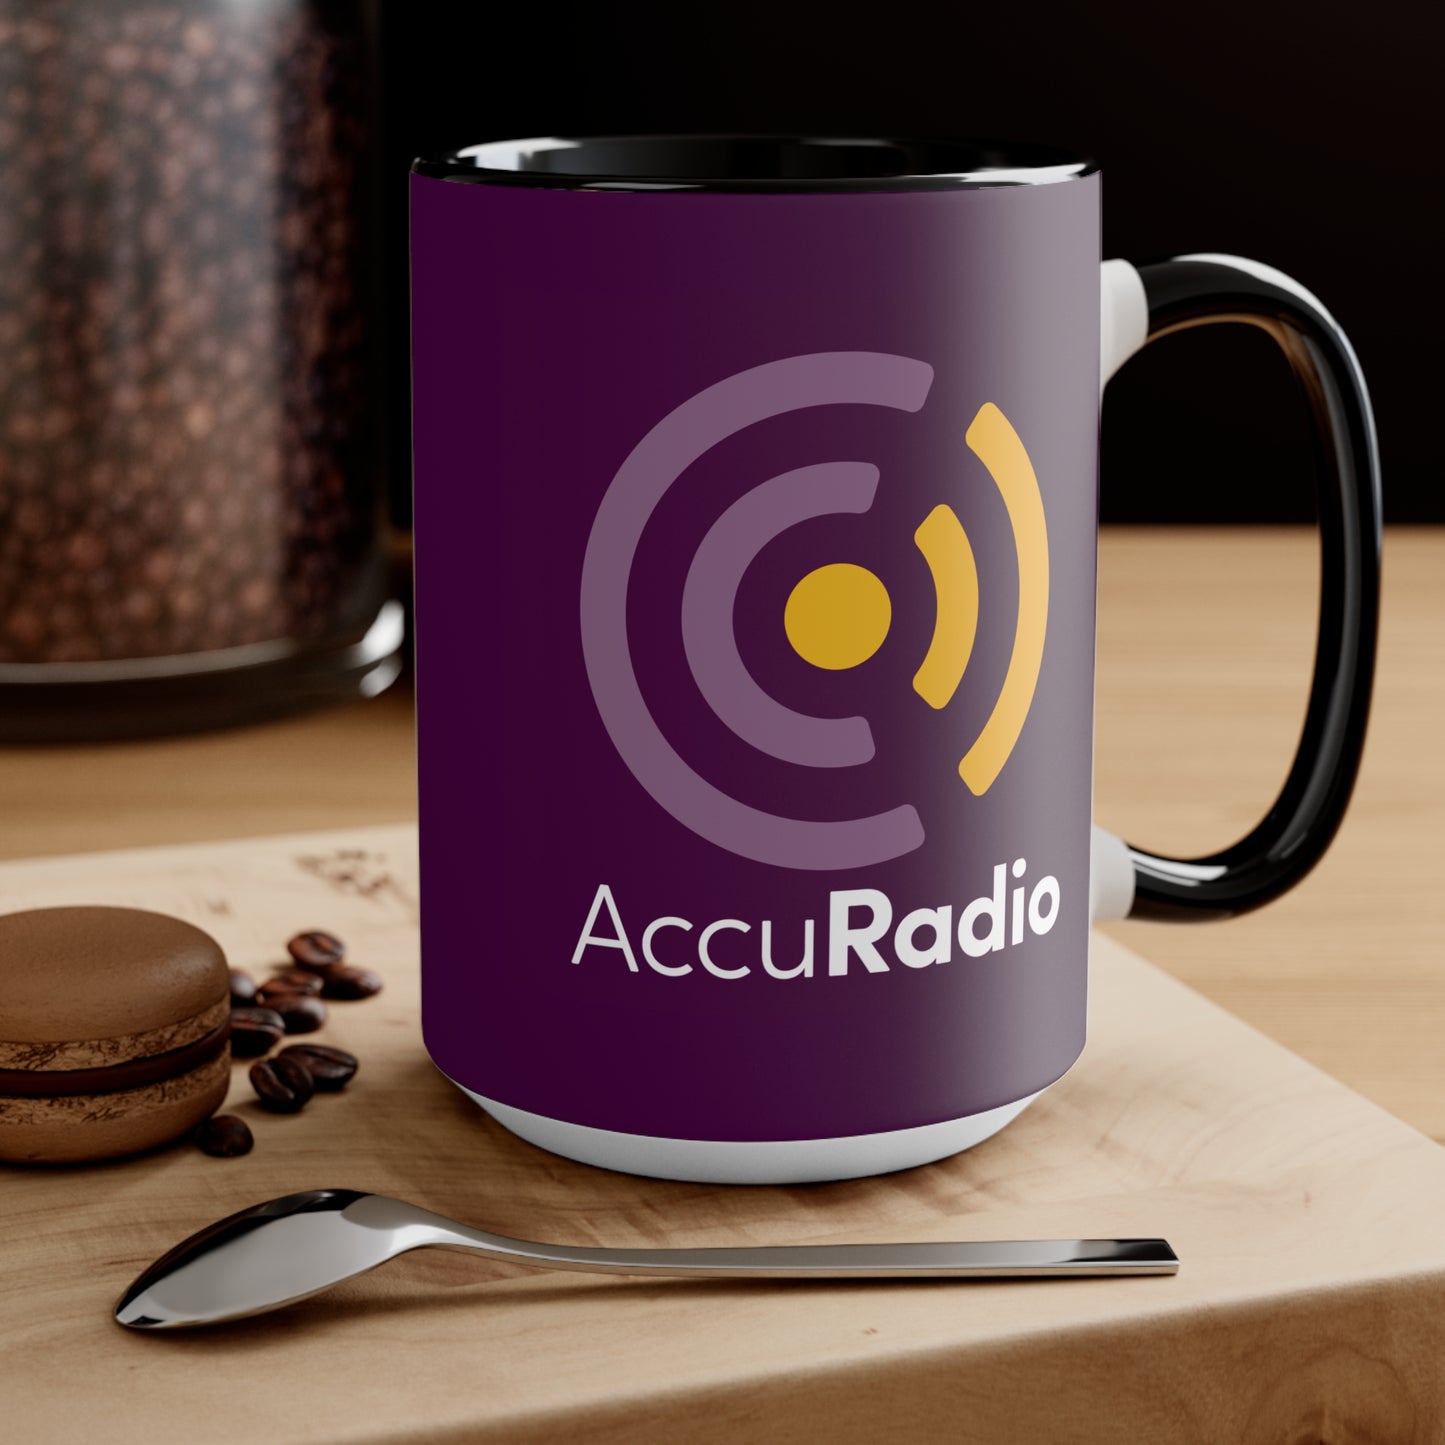 AccuRadio mug